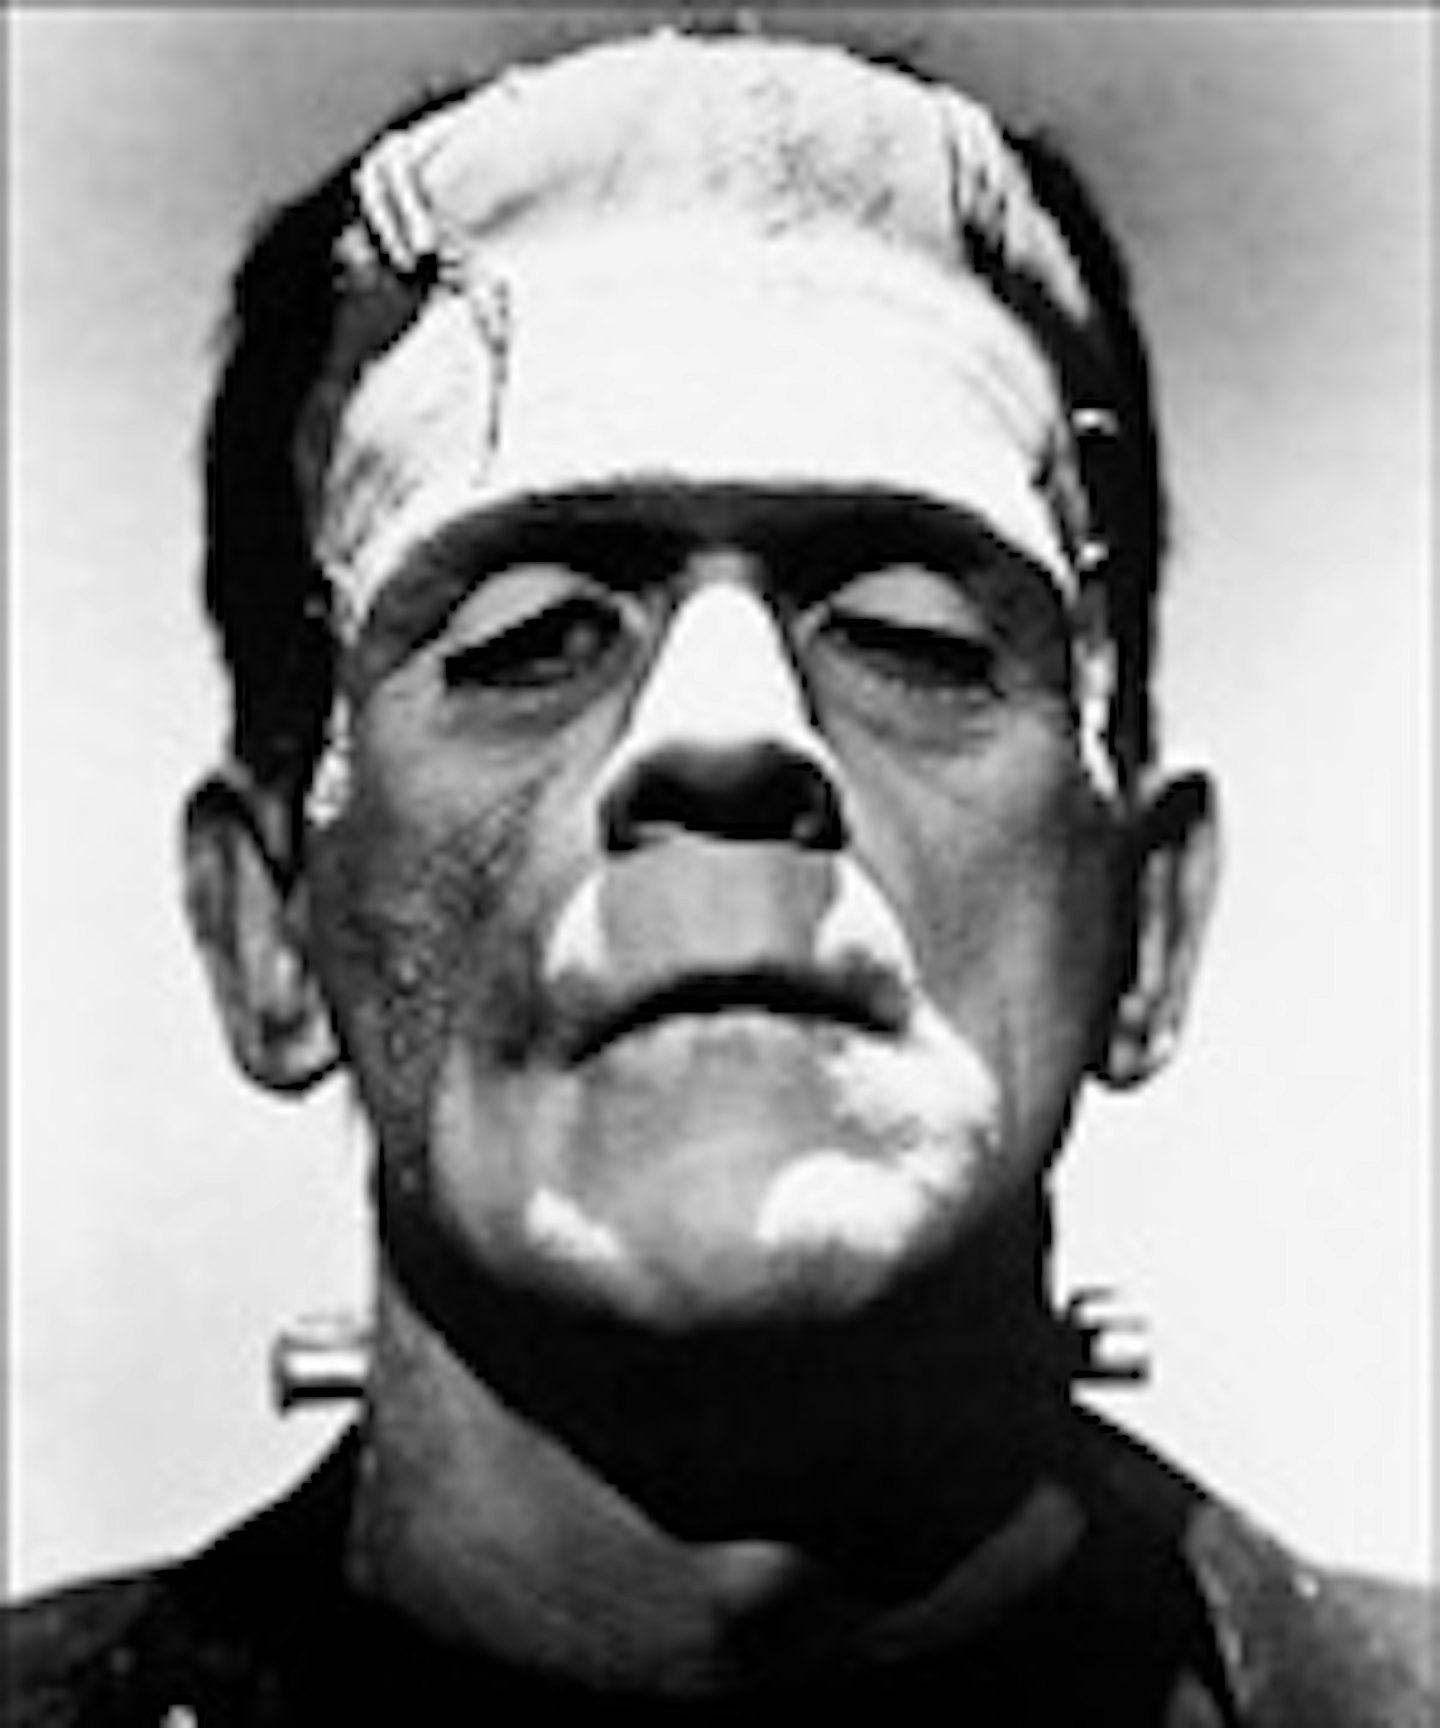 Frankenstein Unearthed Again